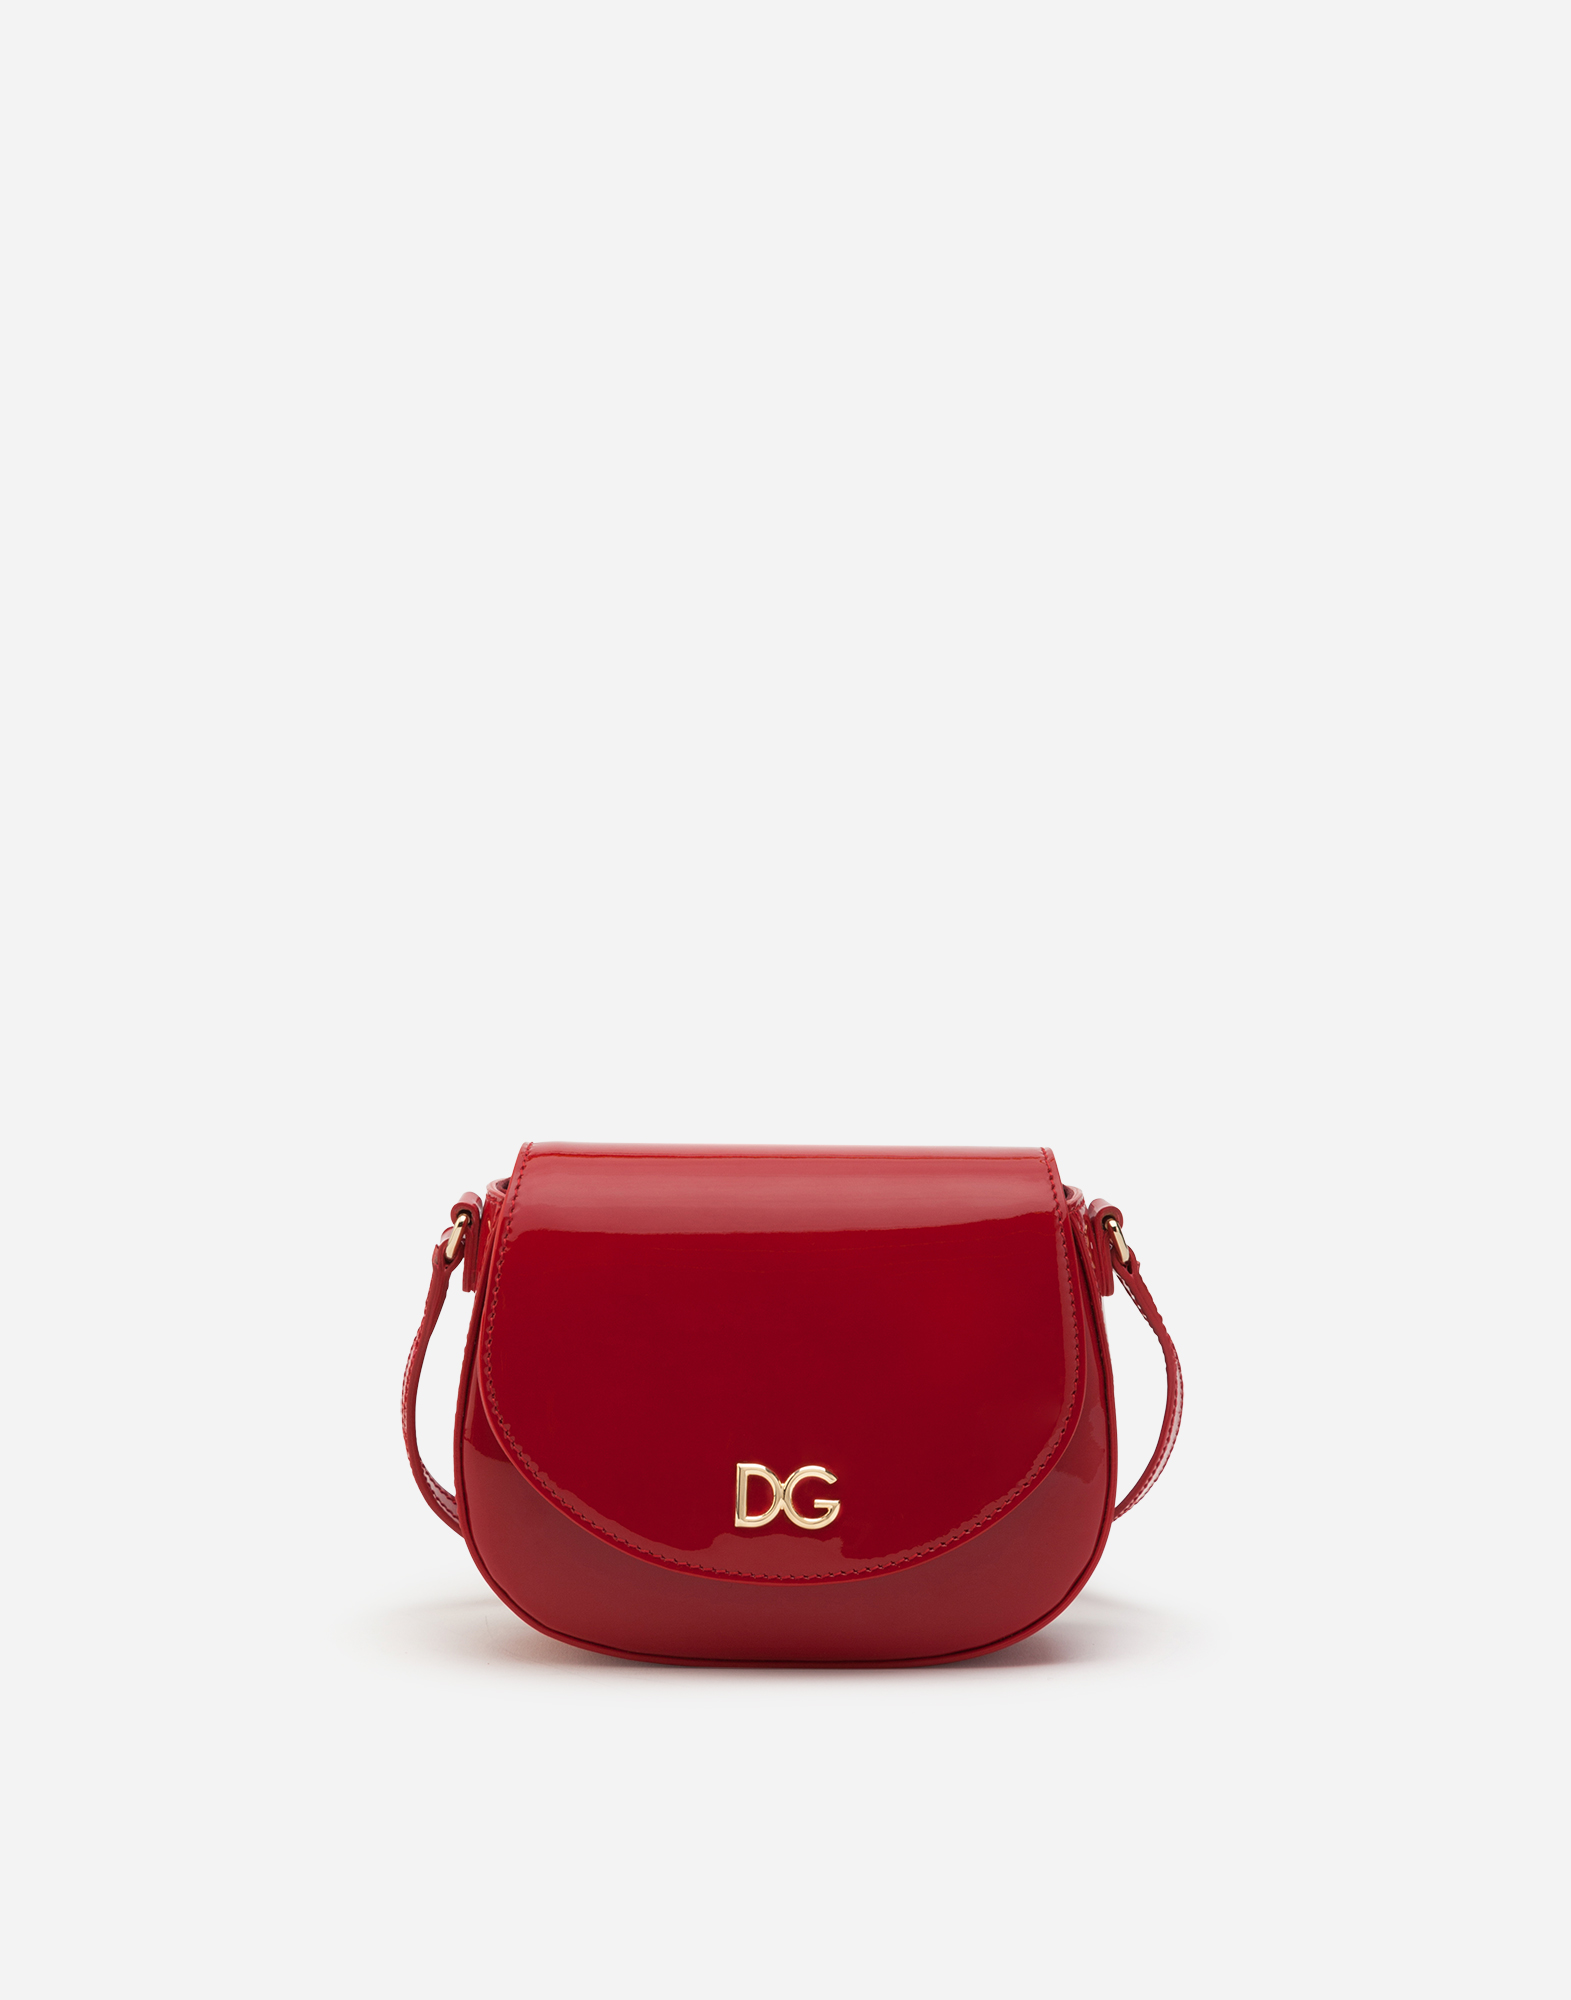 DOLCE & GABBANA Patent leather crossbody bag with DG logo